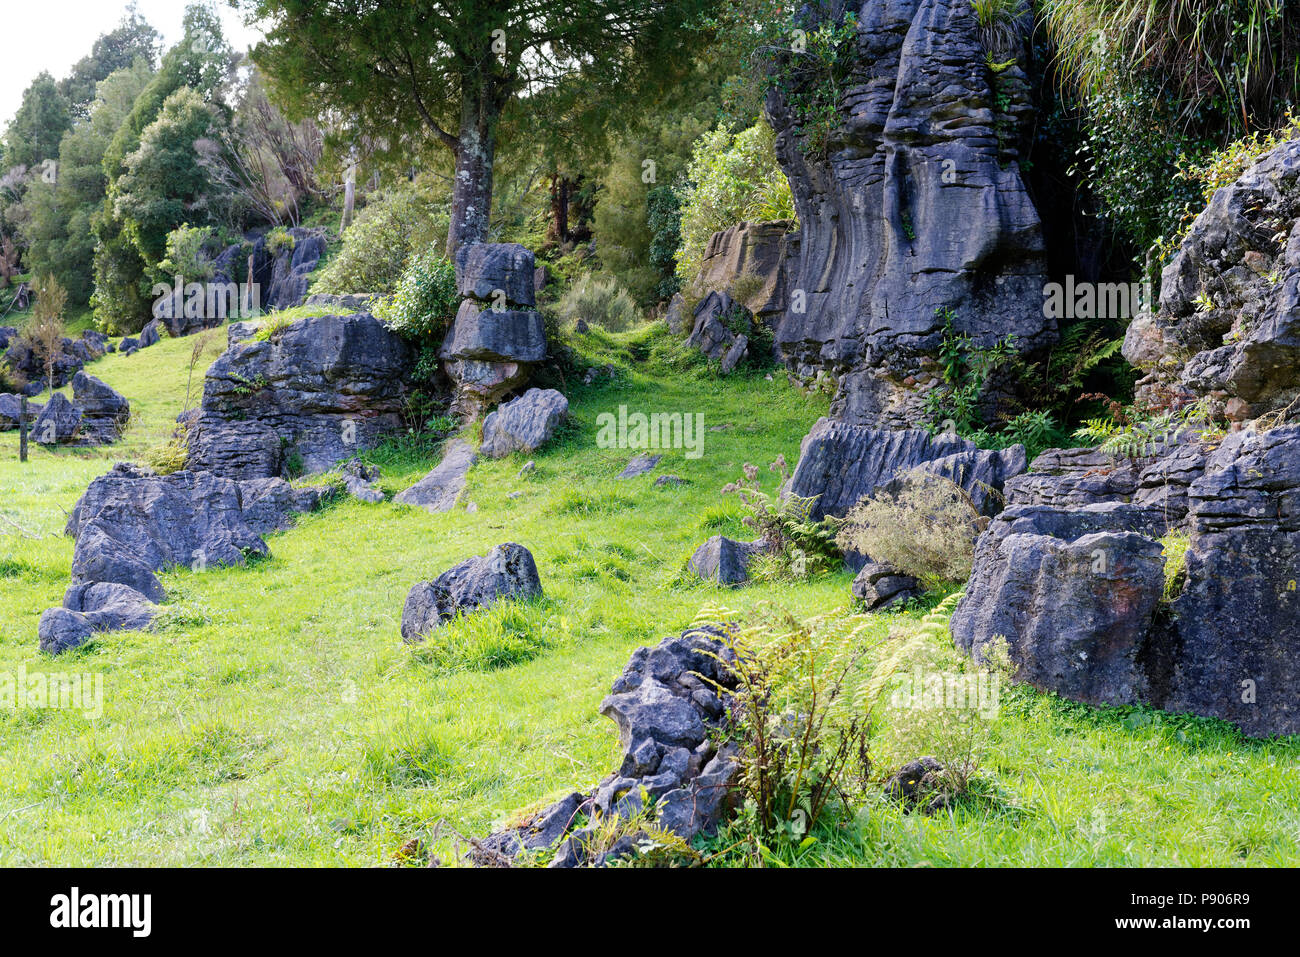 Farmland with basalt rock formations in the Waikato region, New Zealand Stock Photo